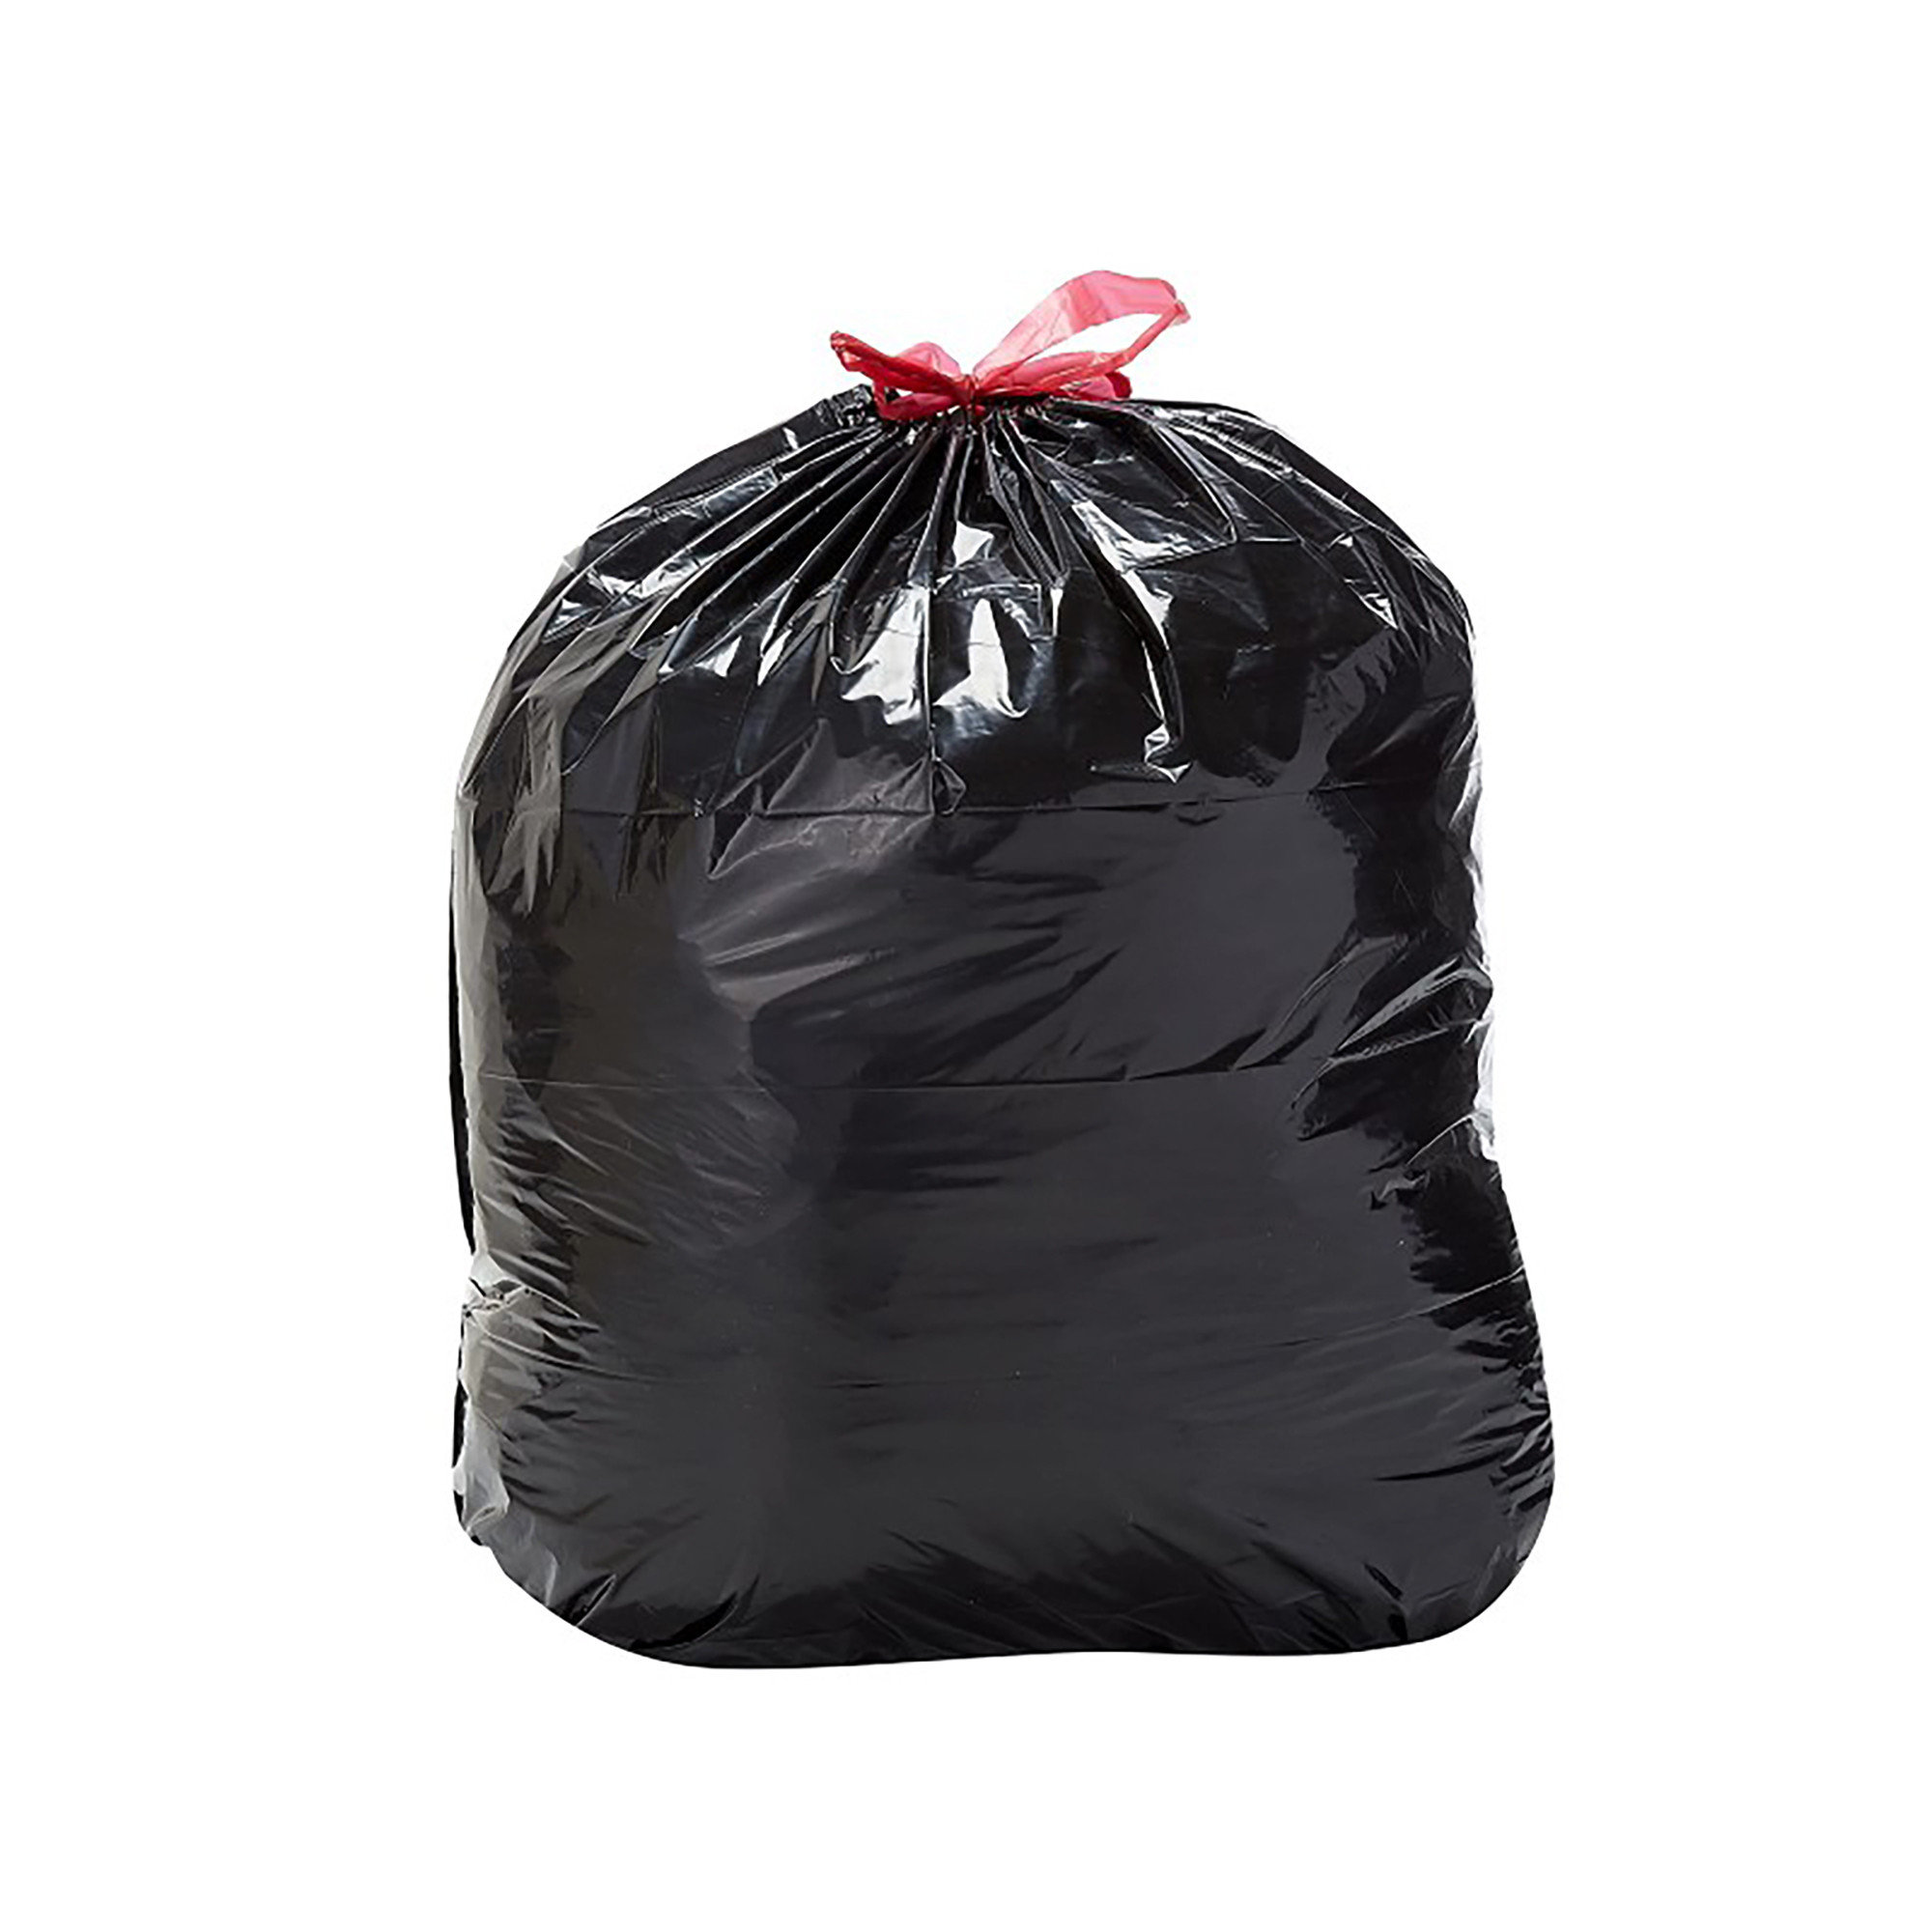 50pcs Trash Can Black Trash Bags Large Clear Garbage Bags